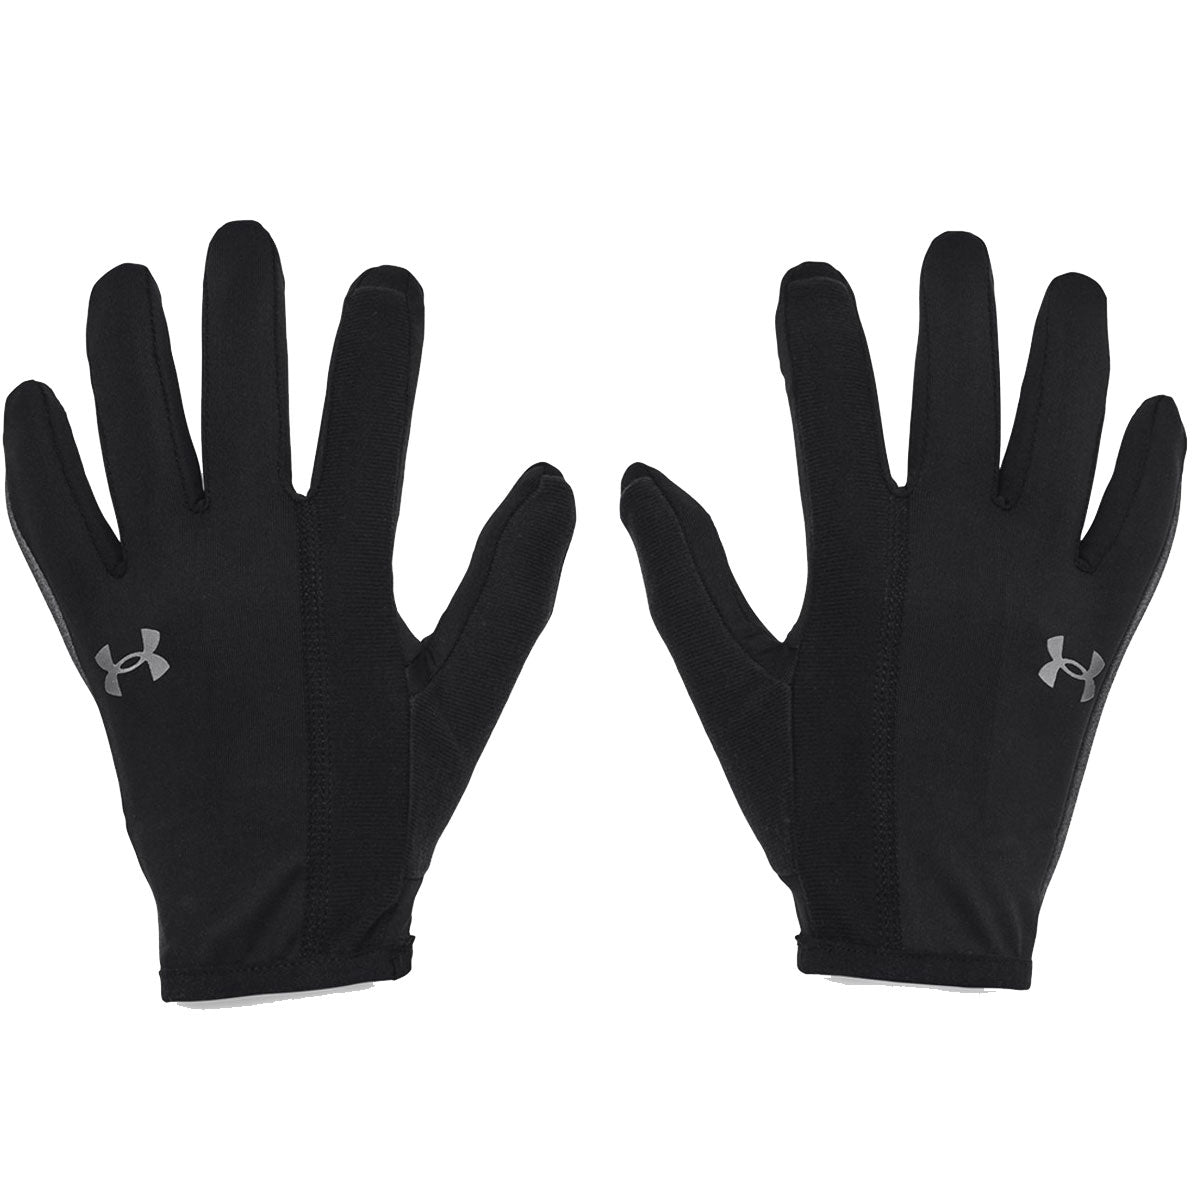 Under Armour Storm Run Liner Gloves - Mens - Black/Reflective